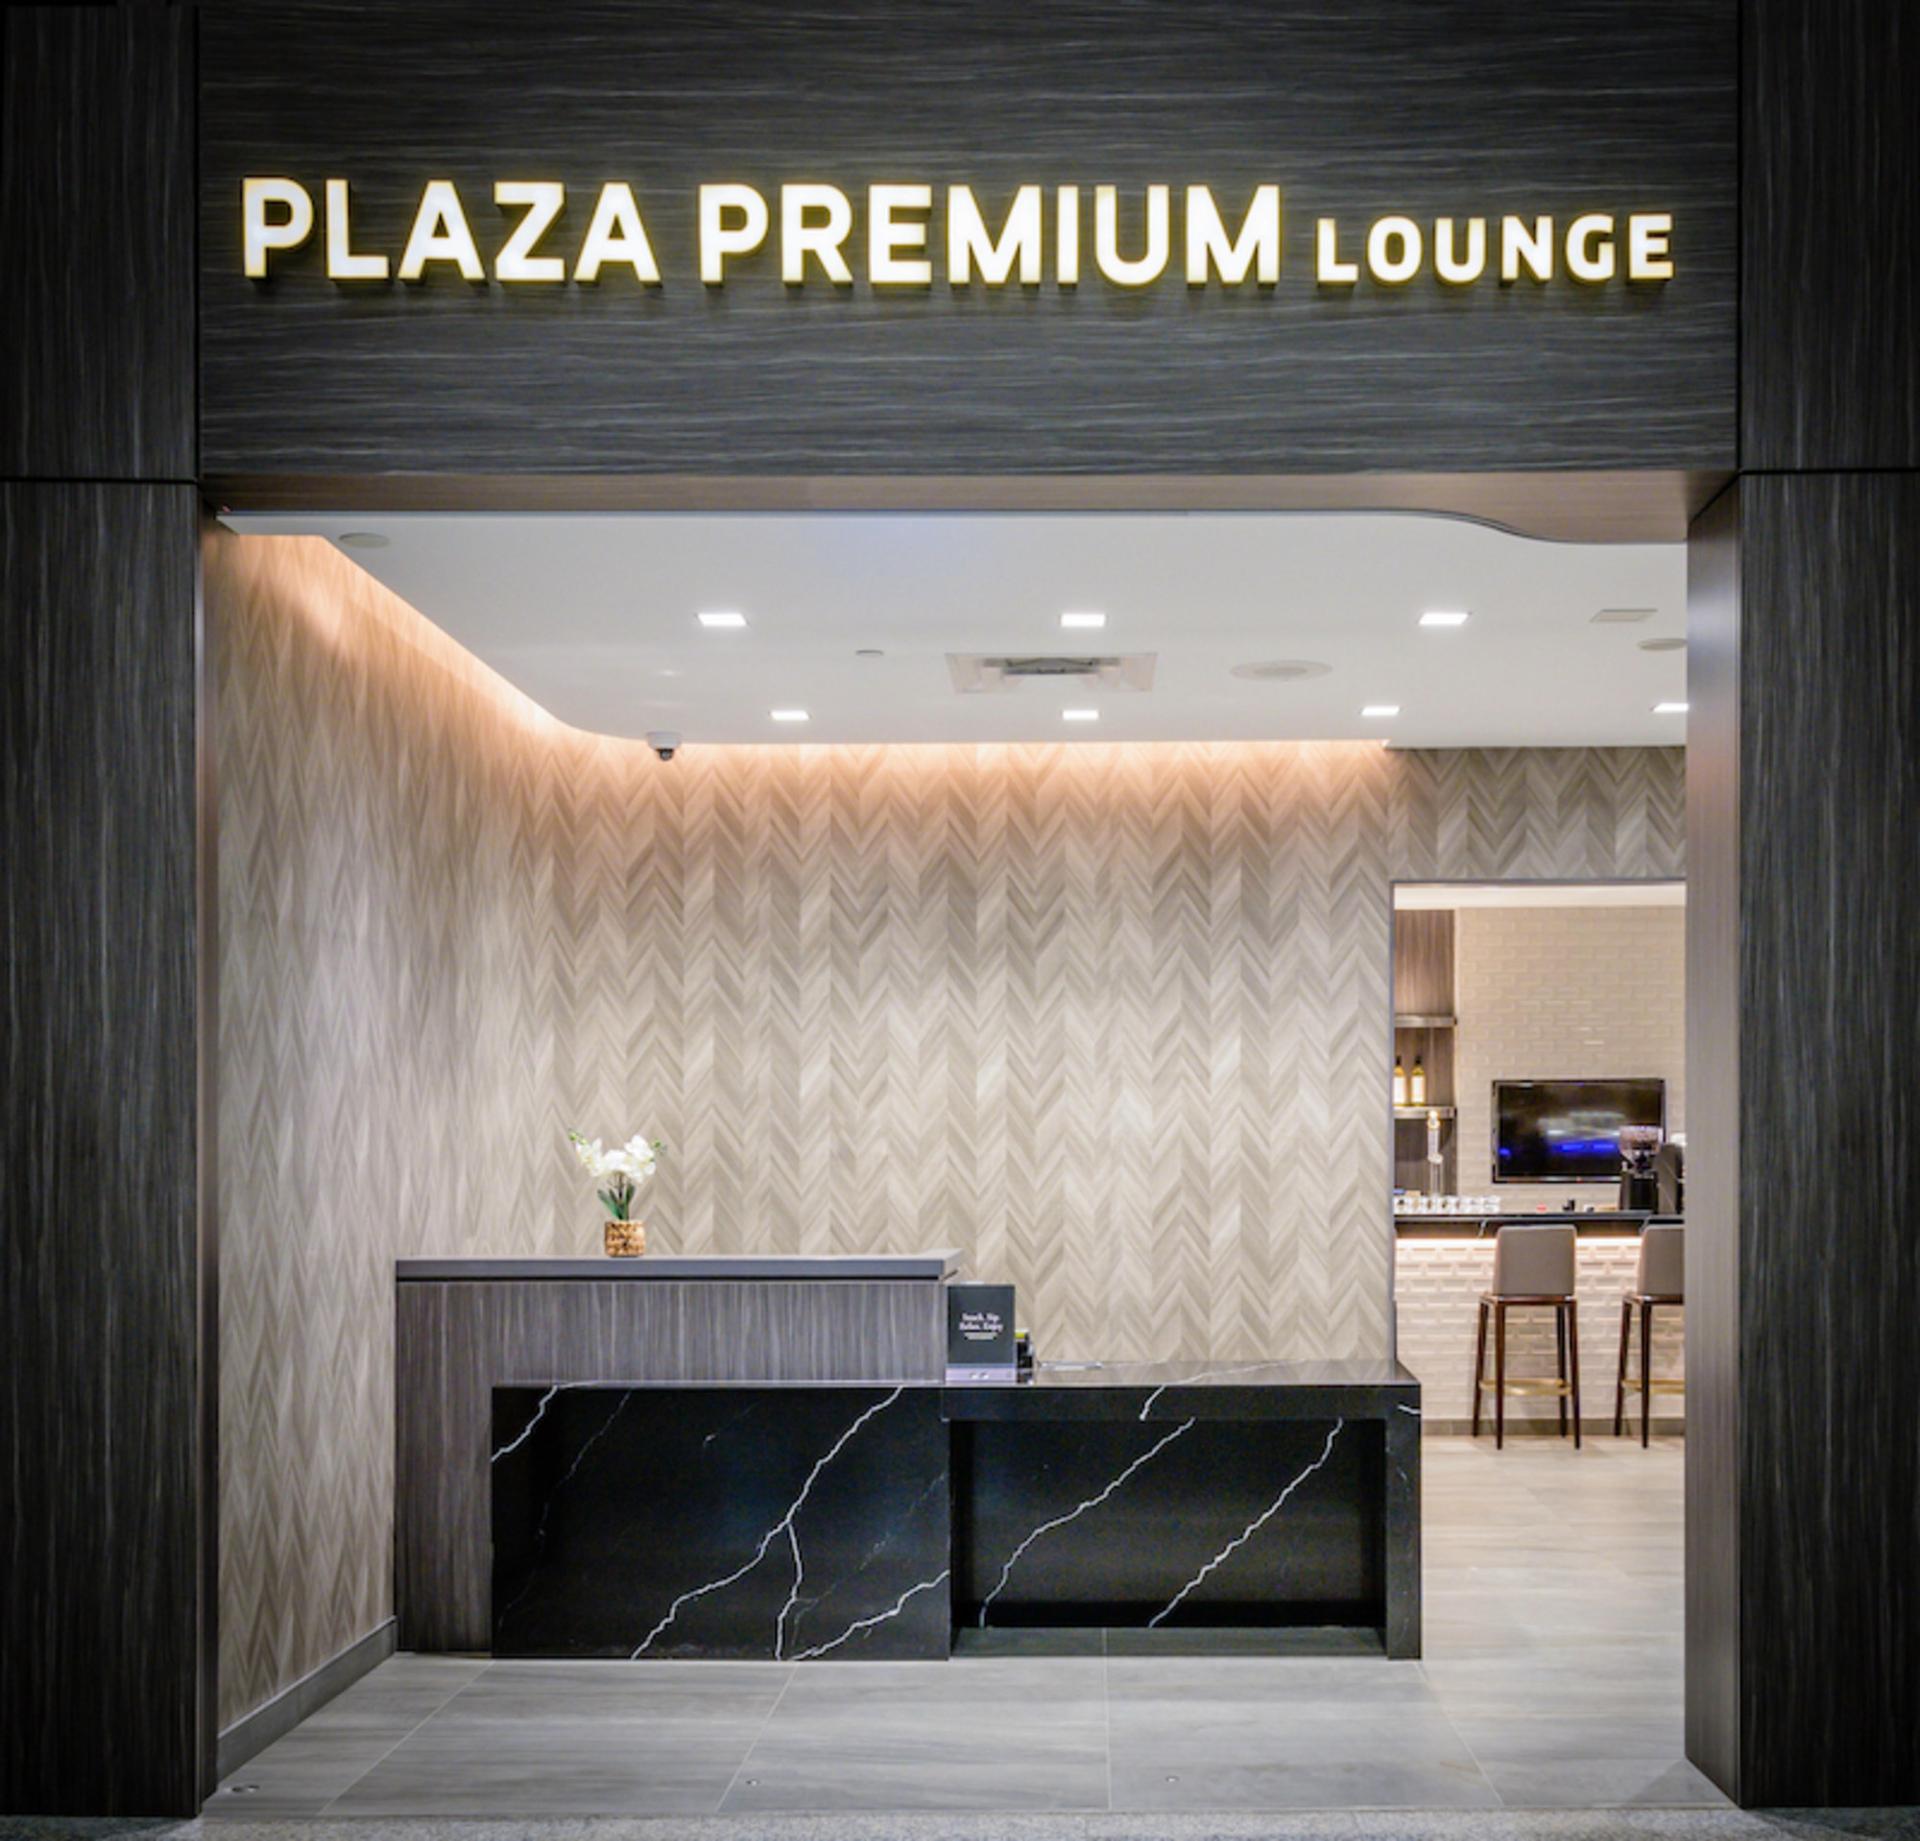 Plaza Premium Lounge image 31 of 31